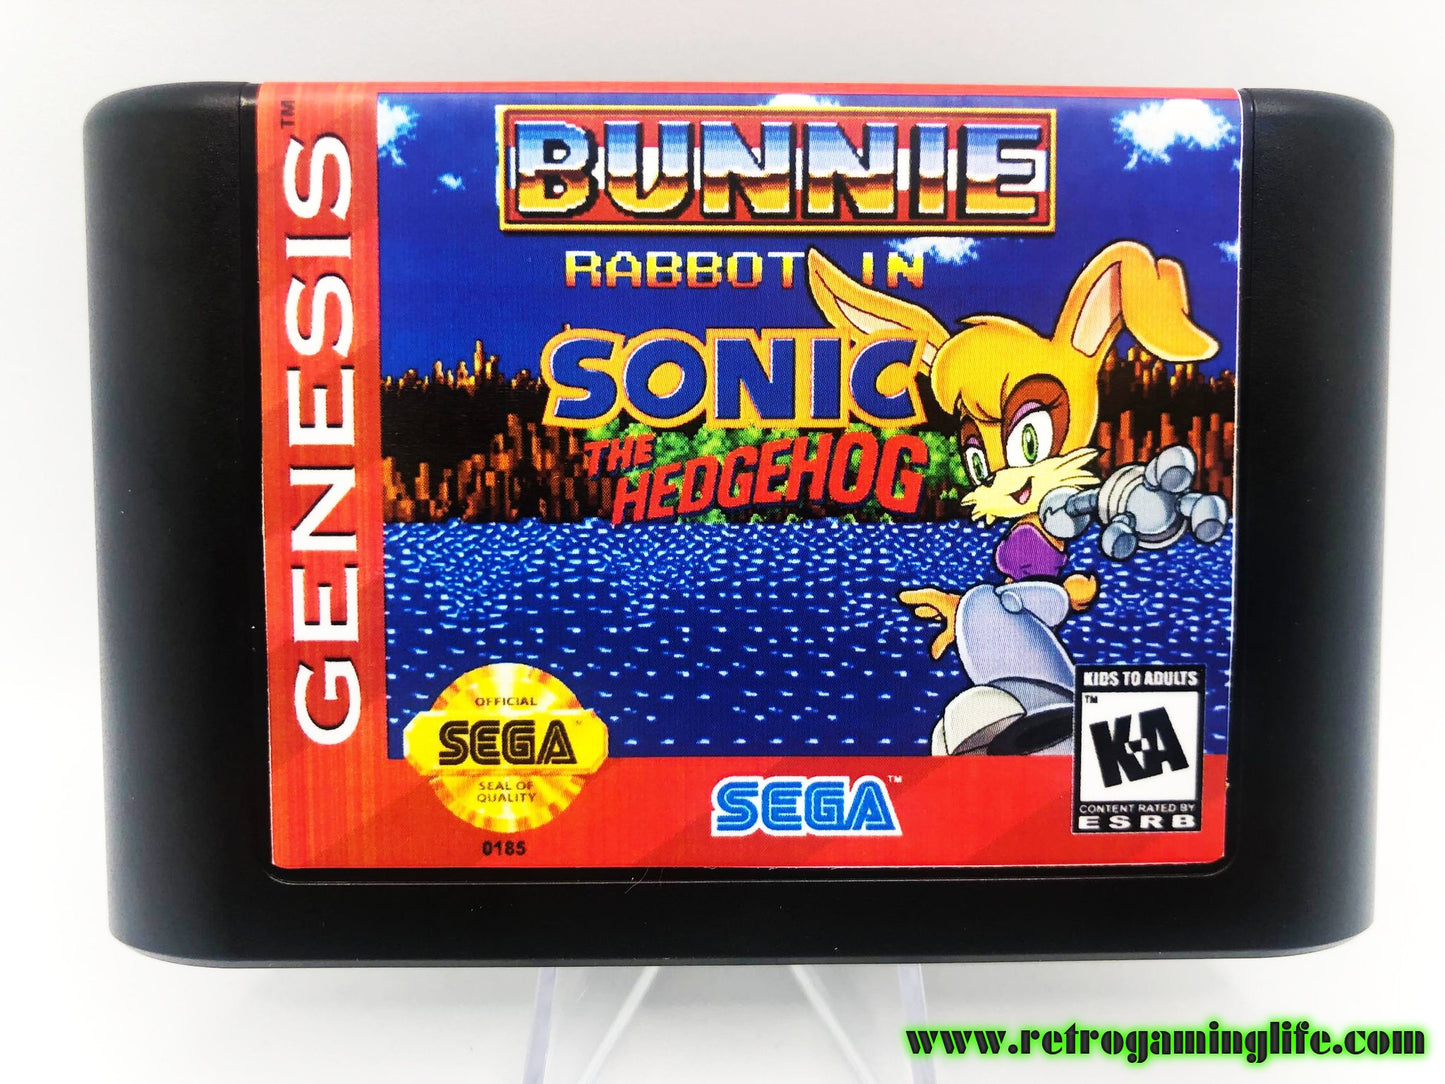 Bunnie Rabbot in Sonic the Hedgehog Sega Genesis Repro Game Cart